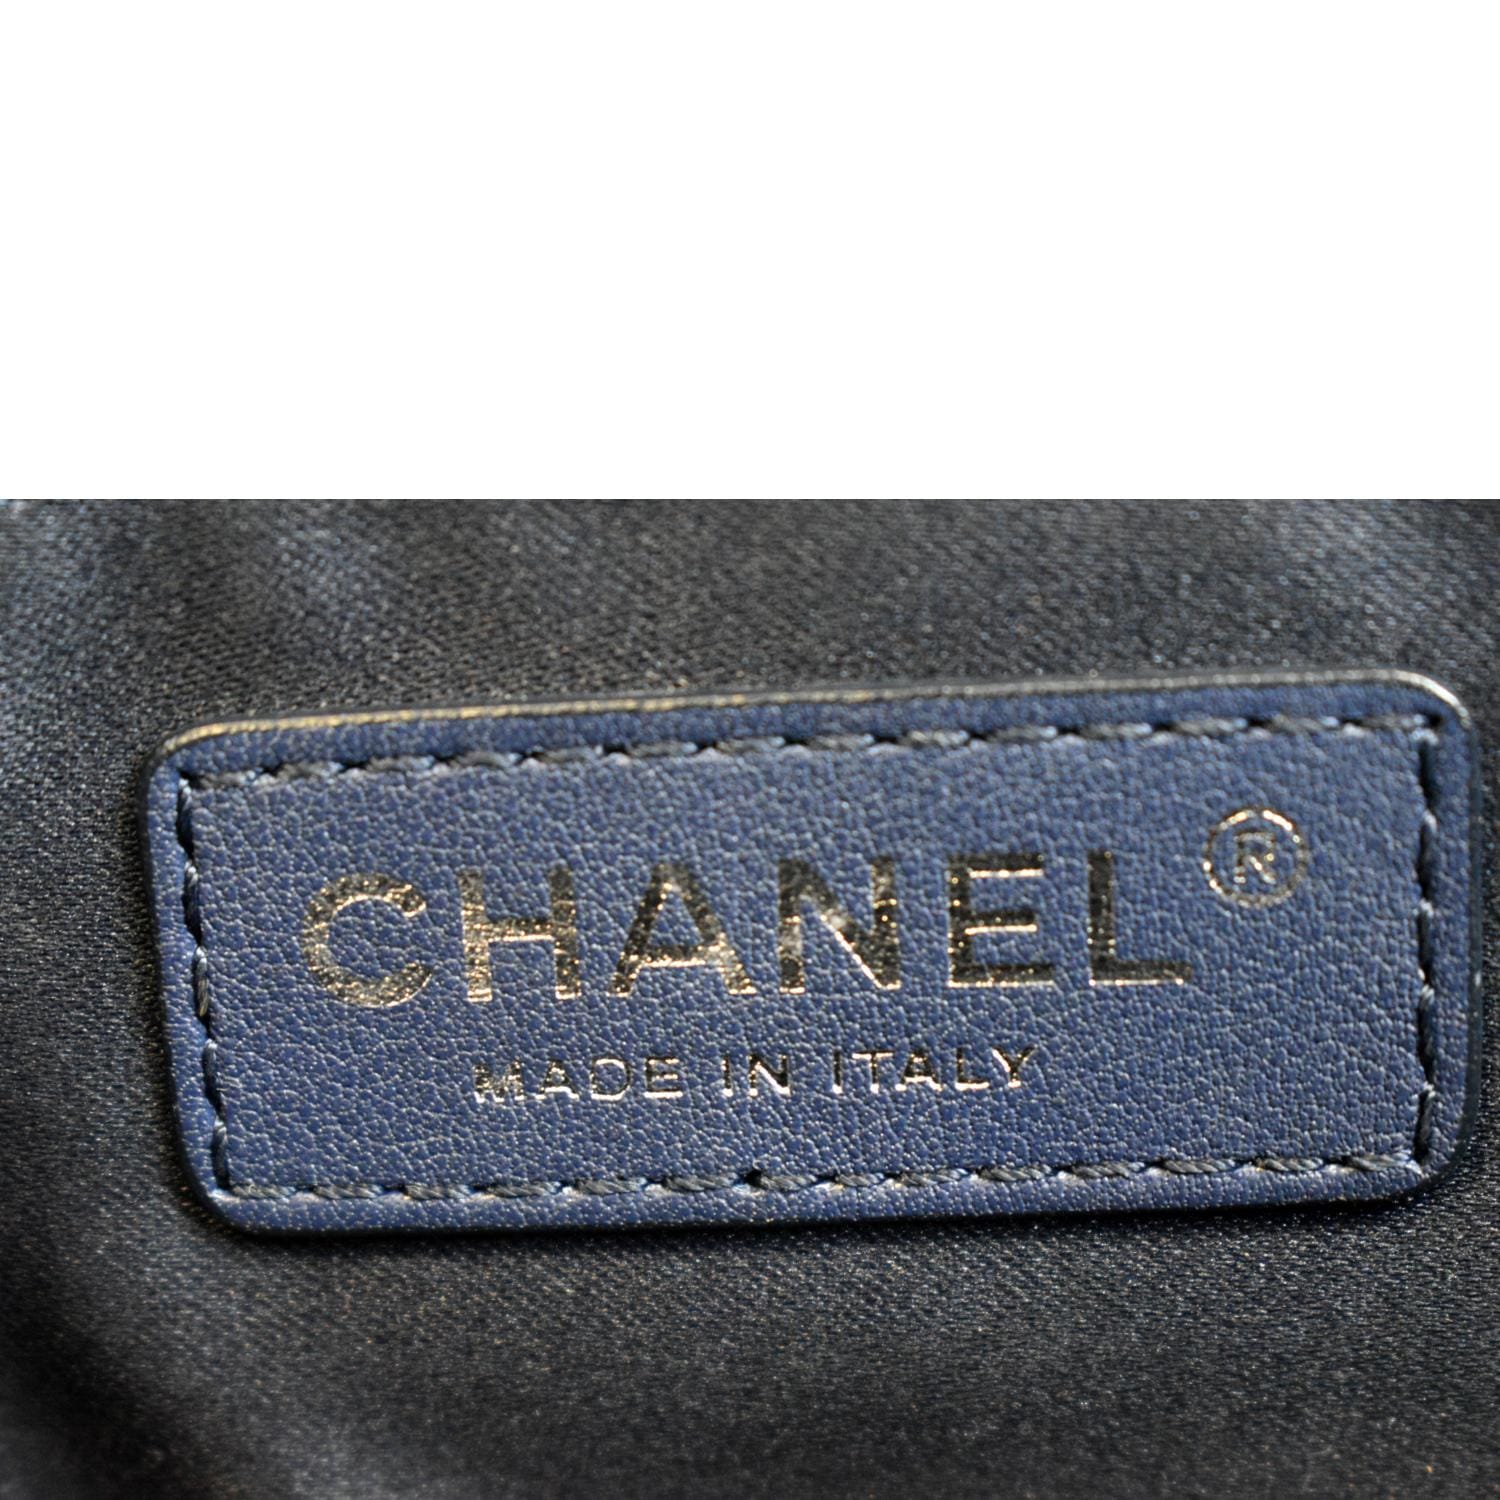 Fashion « Chanel-Vuitton », Sale n°2089, Lot n°87